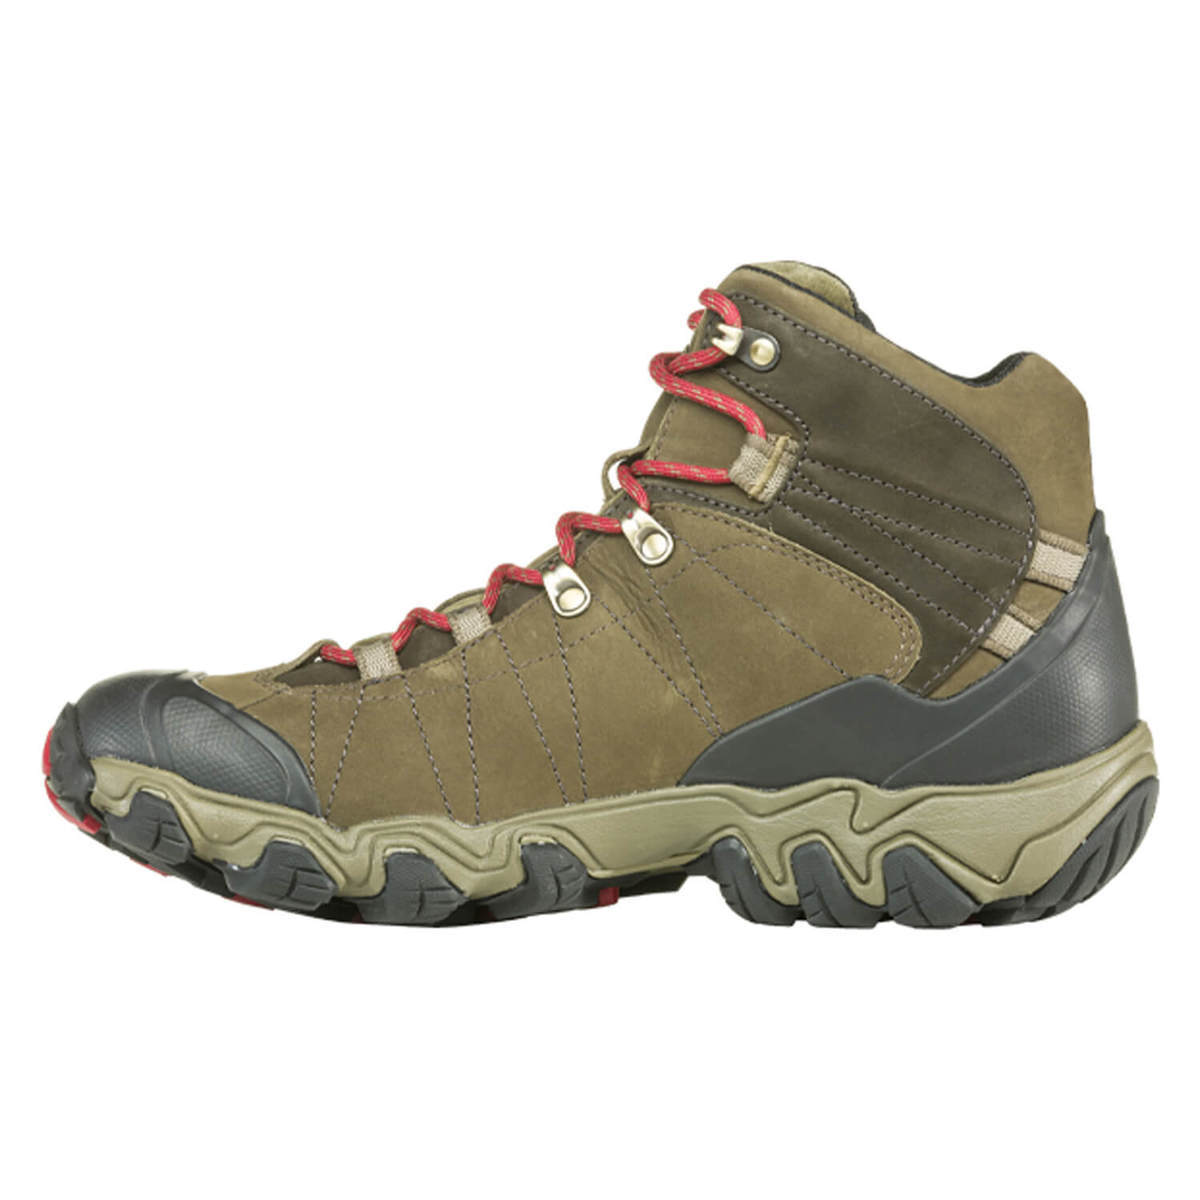 Oboz Men's Bridger Waterproof Mid Hiking Boots - Olive - Size 9.5 ...